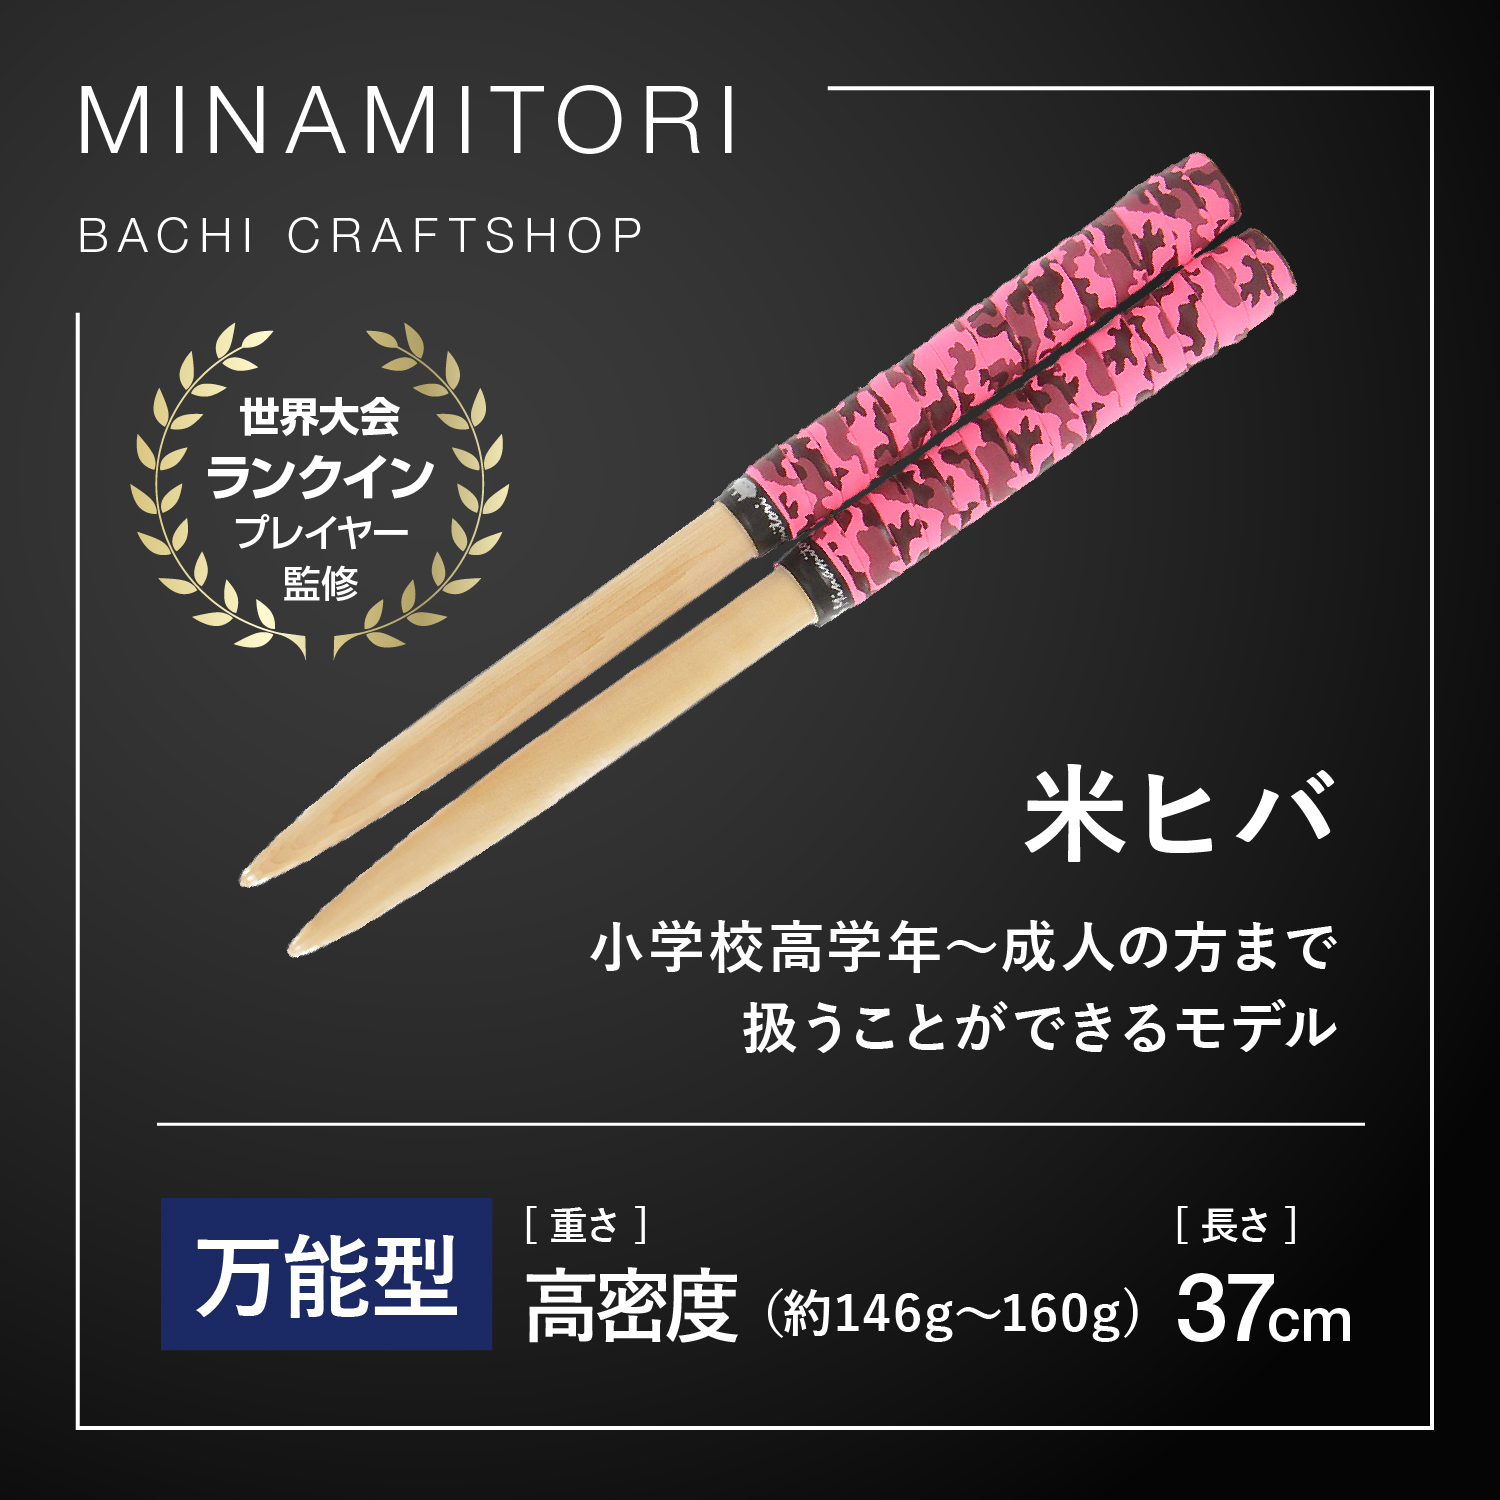 Minamitoriバチ工房 マイバチ 米ヒバ 37cm 重さ:高密度 精度型